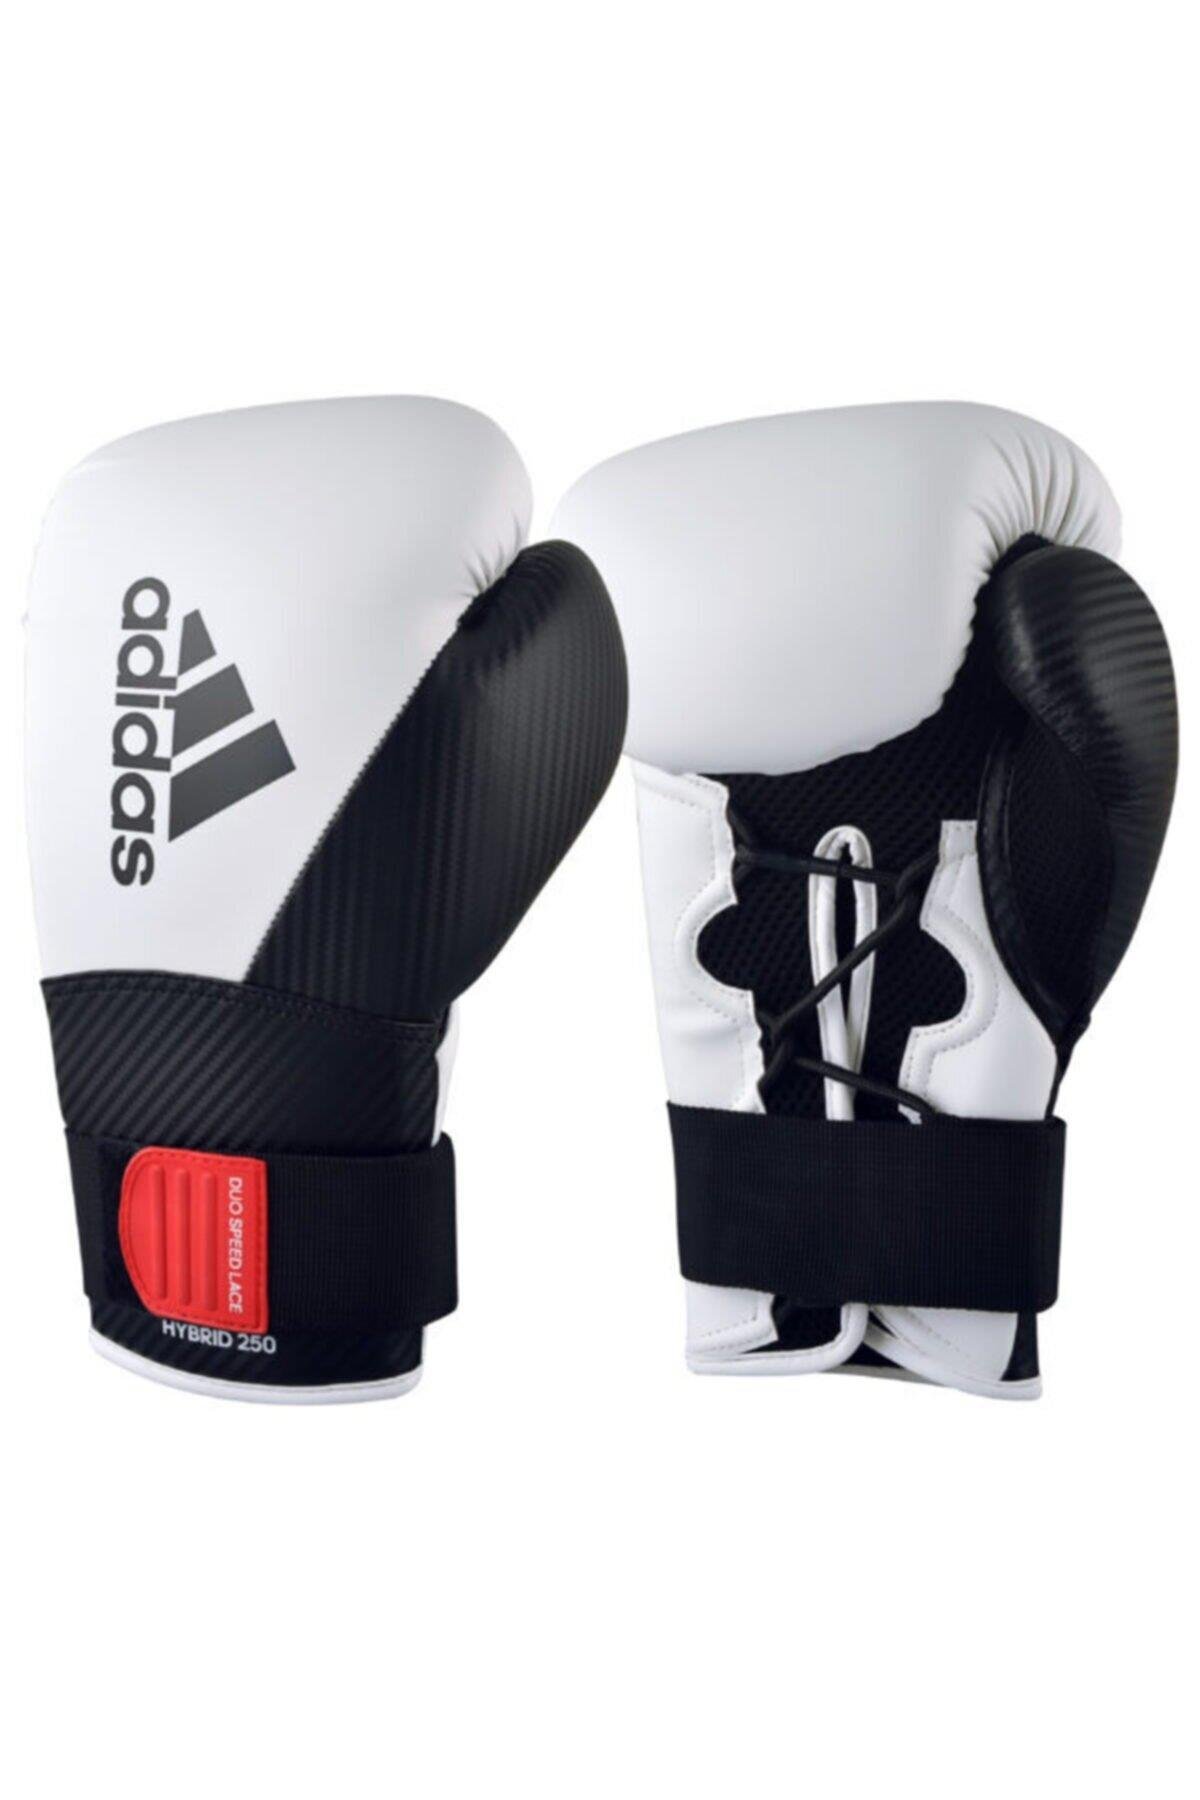 Adidas ADIH250TG Hybrid250 Boks Eldiveni Boxing Gloves - Boksshop